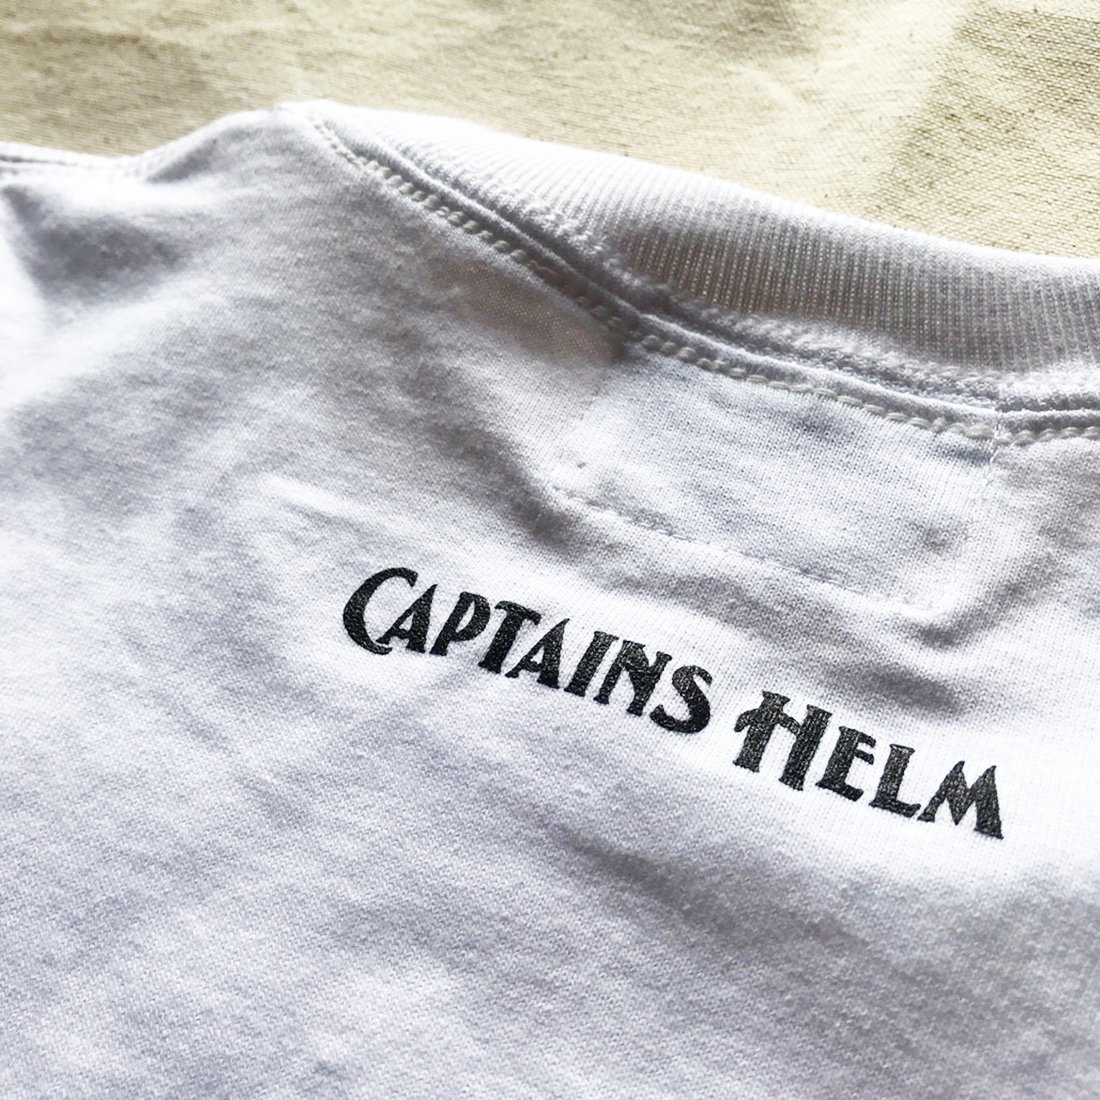 captains helm × rising sun coffee Tシャツ